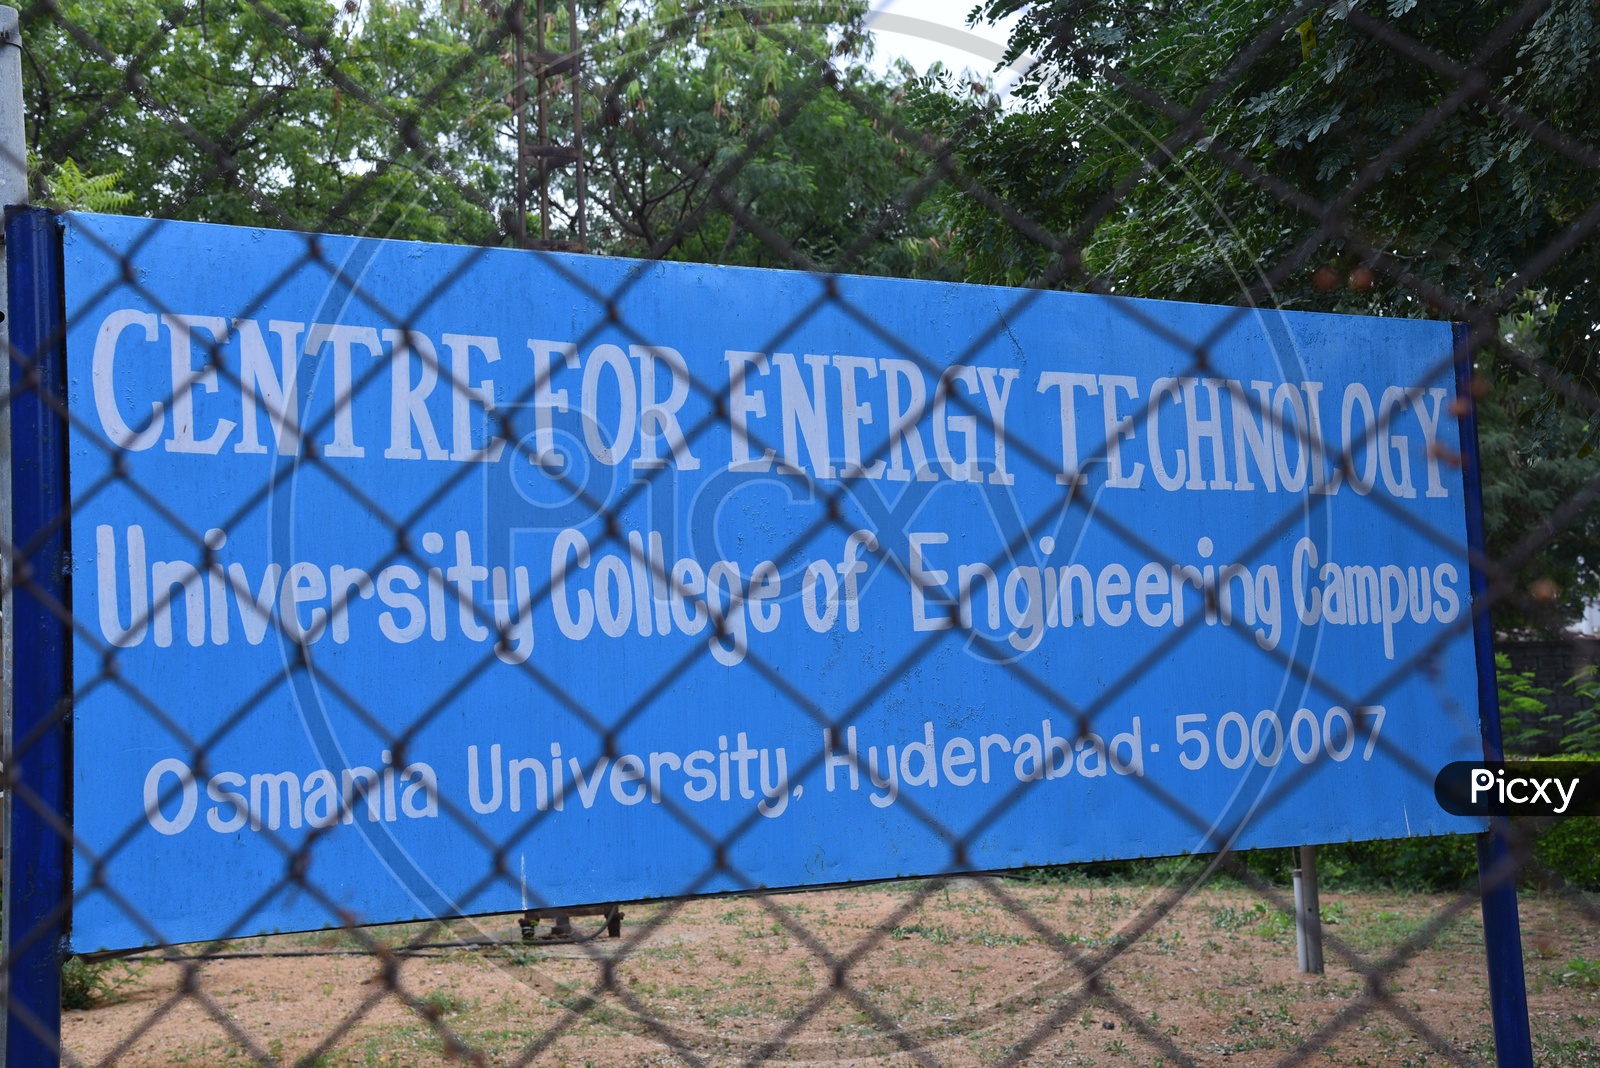 Centre For Energy Technology in Osmania University